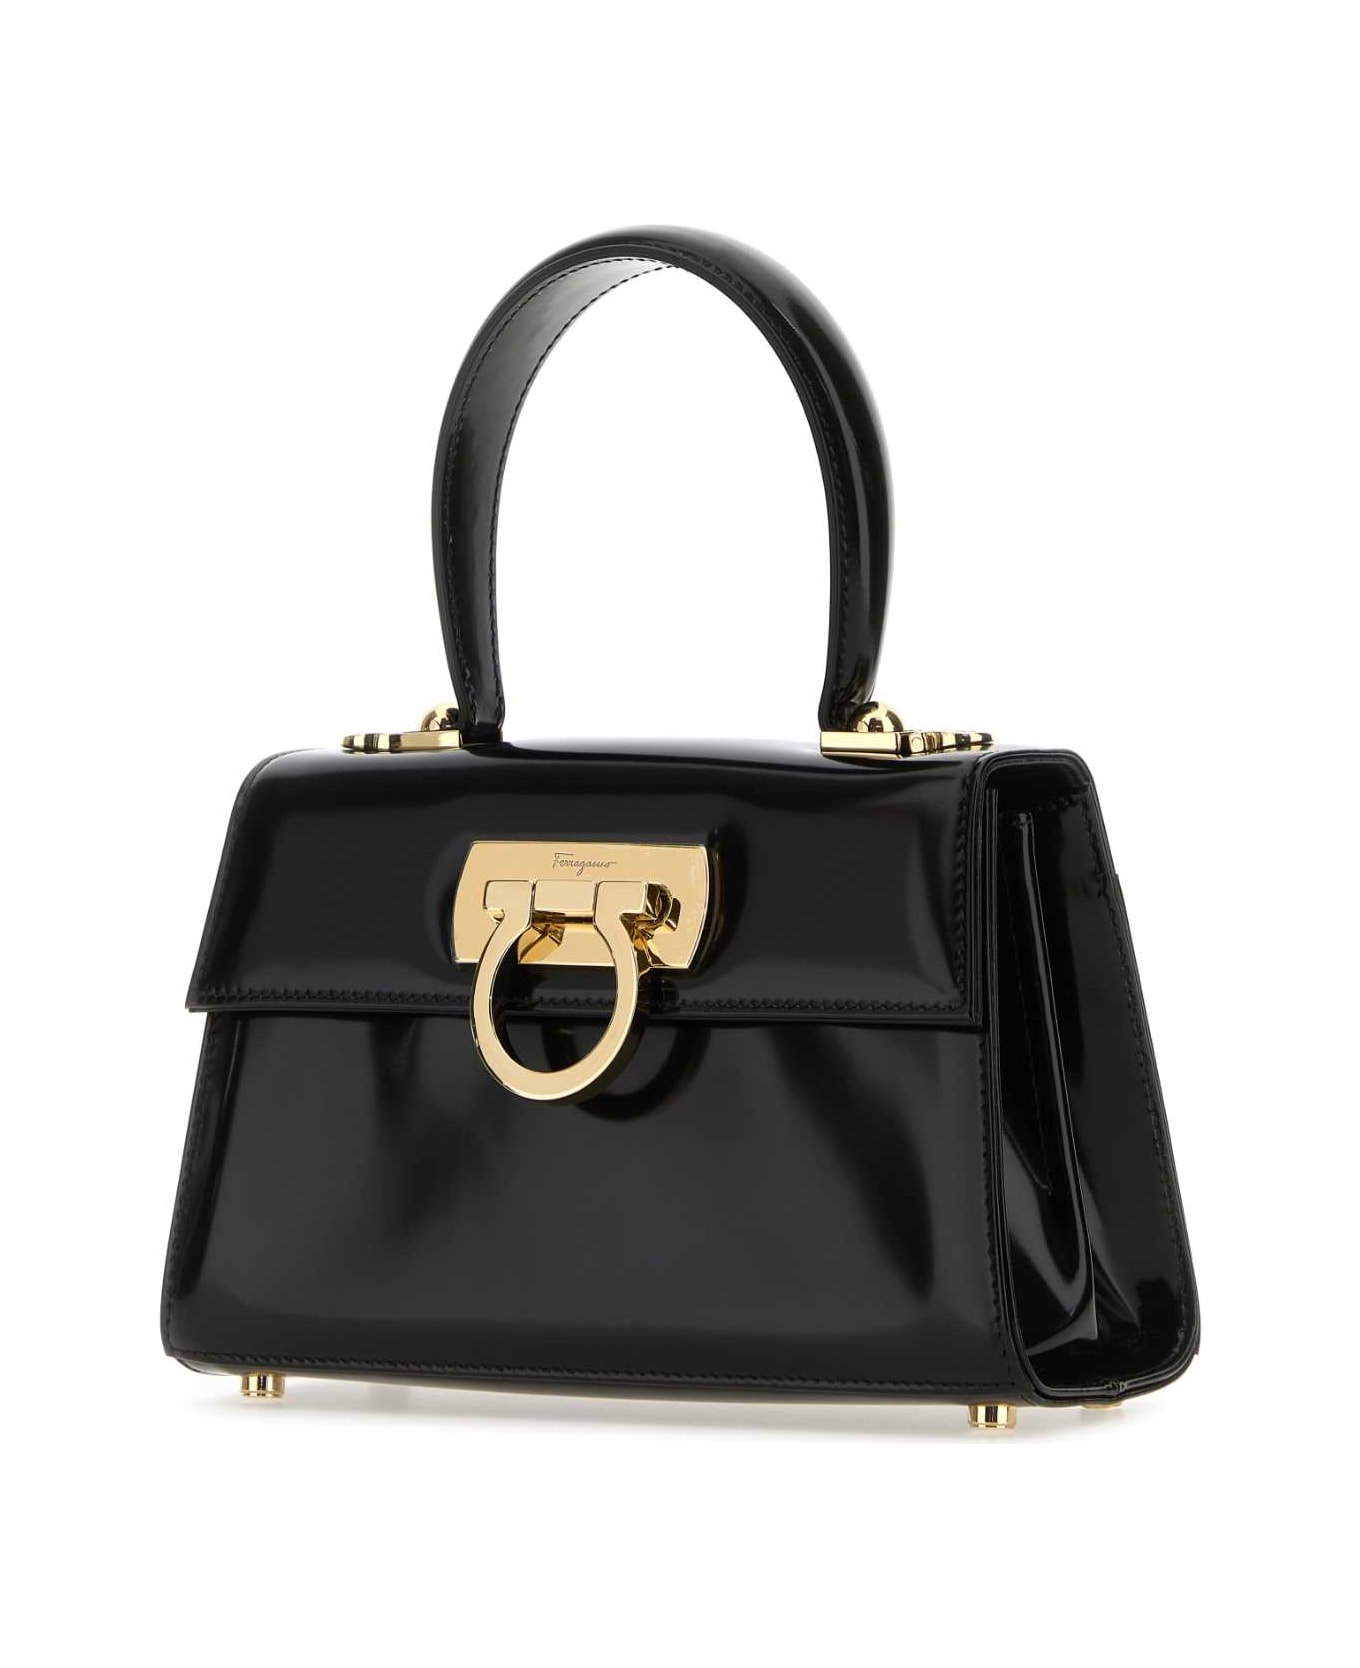 Ferragamo Black Leather Mini Iconic Handbag - NERONERONERO